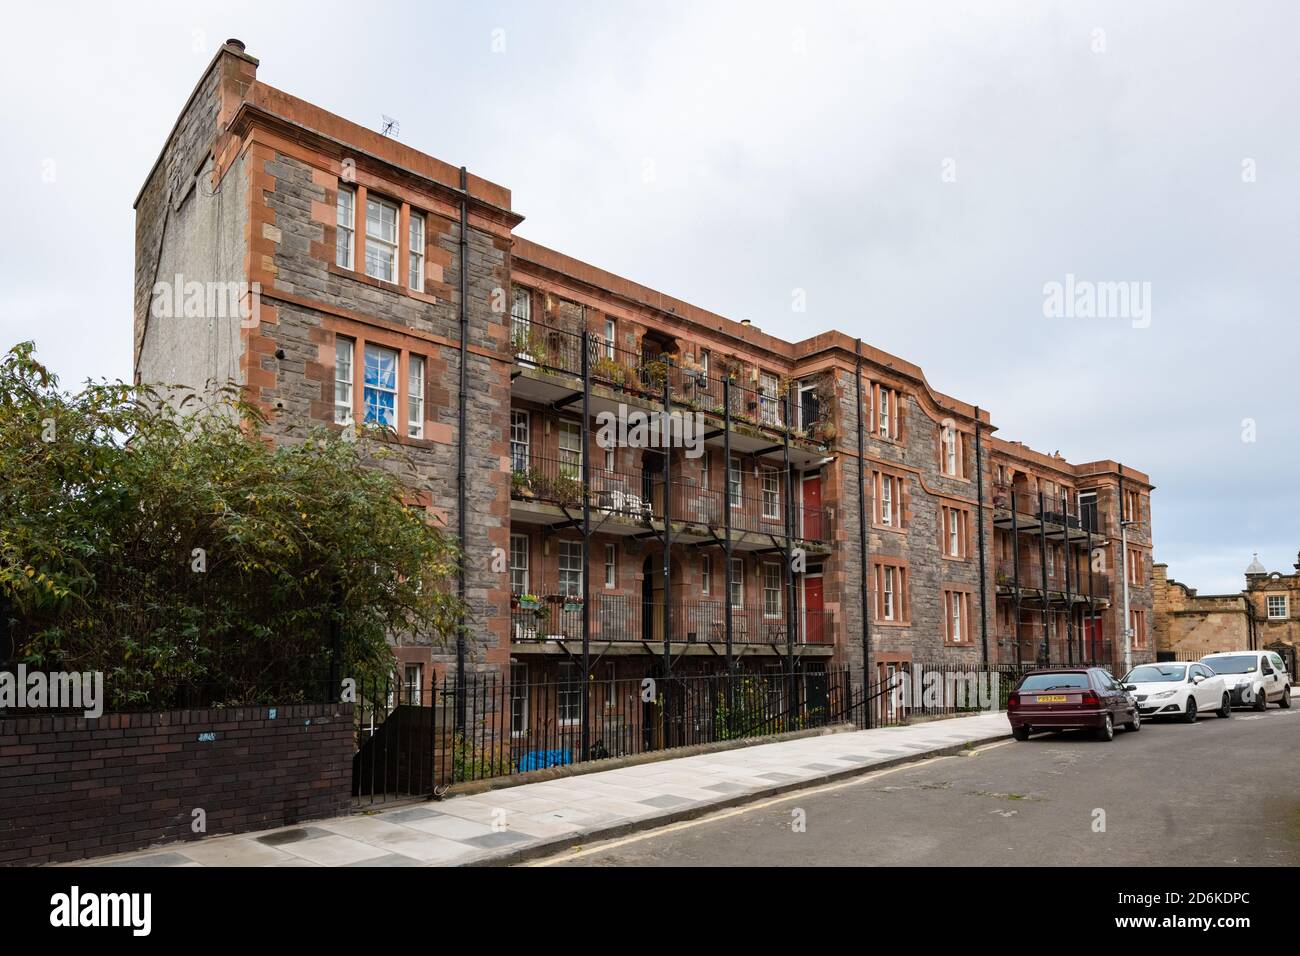 High School Yards sandstone tenements - social housing built in 1896-7 - Edinburgh, Scotland, UK Stock Photo